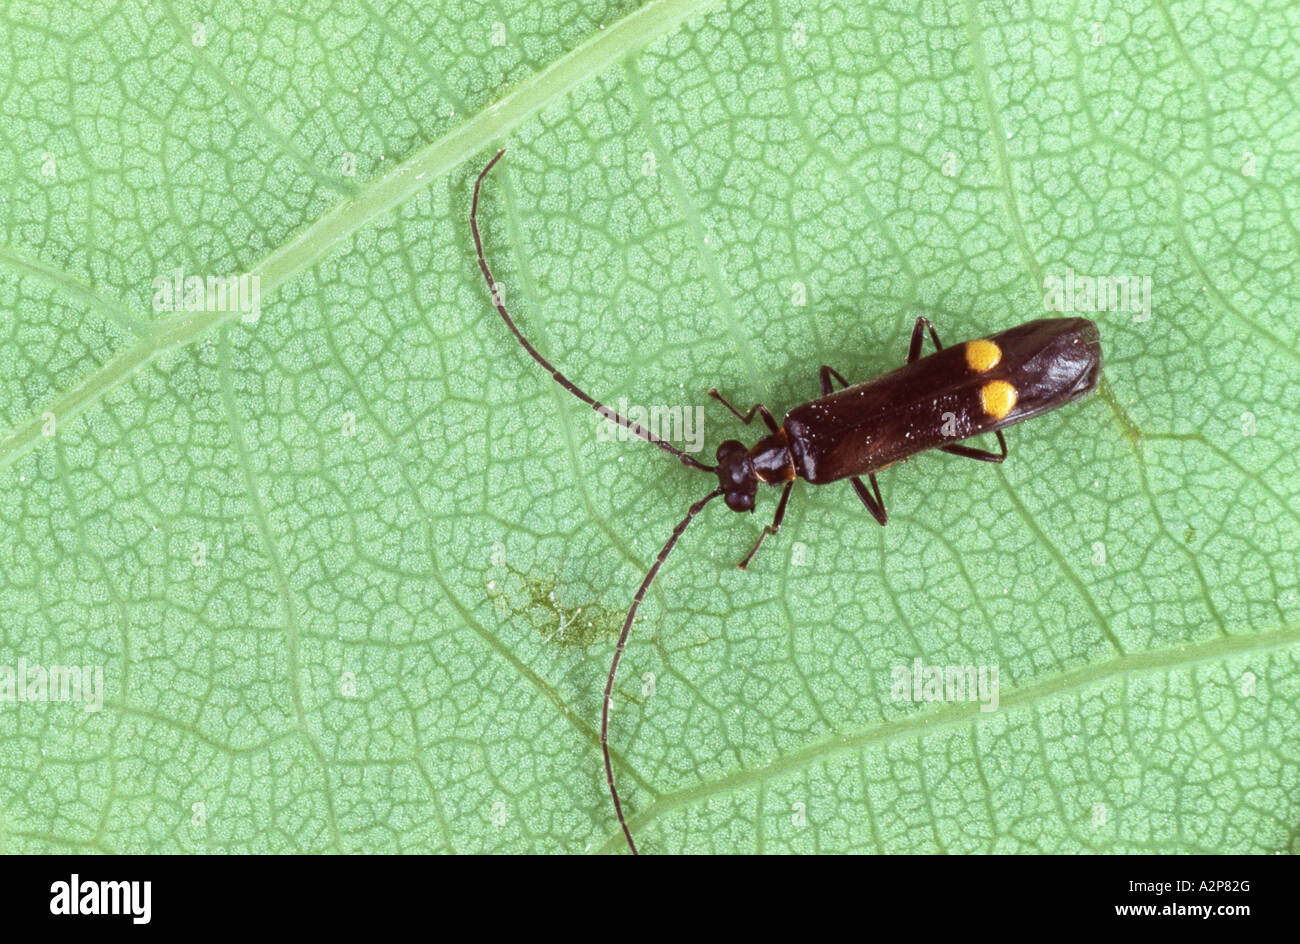 cantharid, soldier beetle (Malthodes guttifer), on a leaf Stock Photo